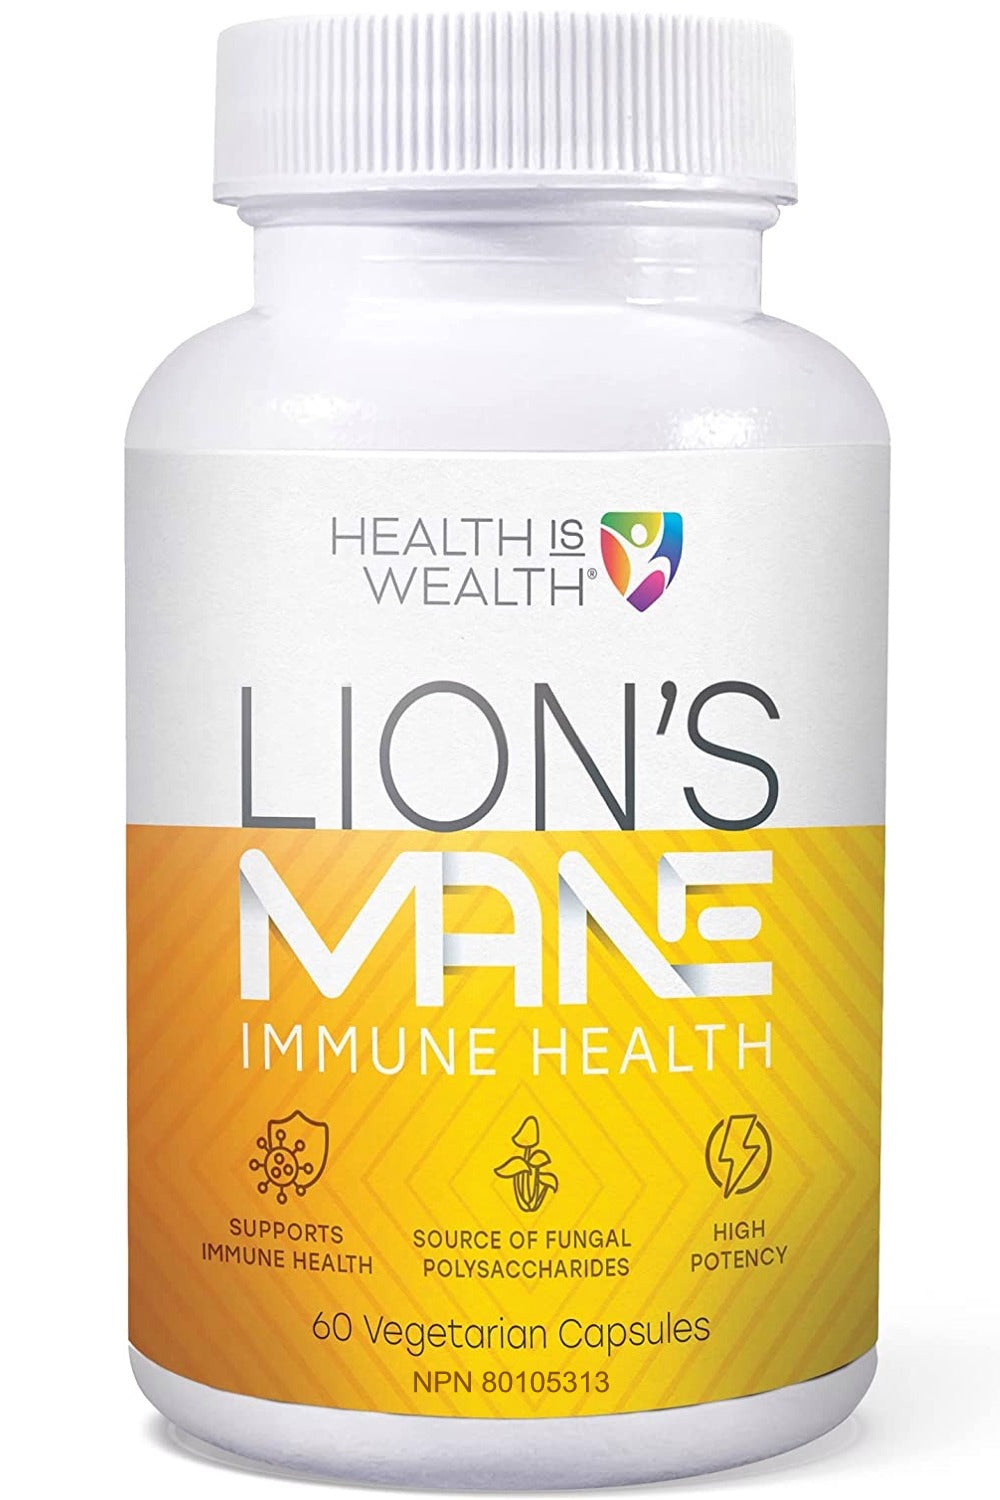 HEALTH IS WEALTH Lion's Mane (60 v caps)